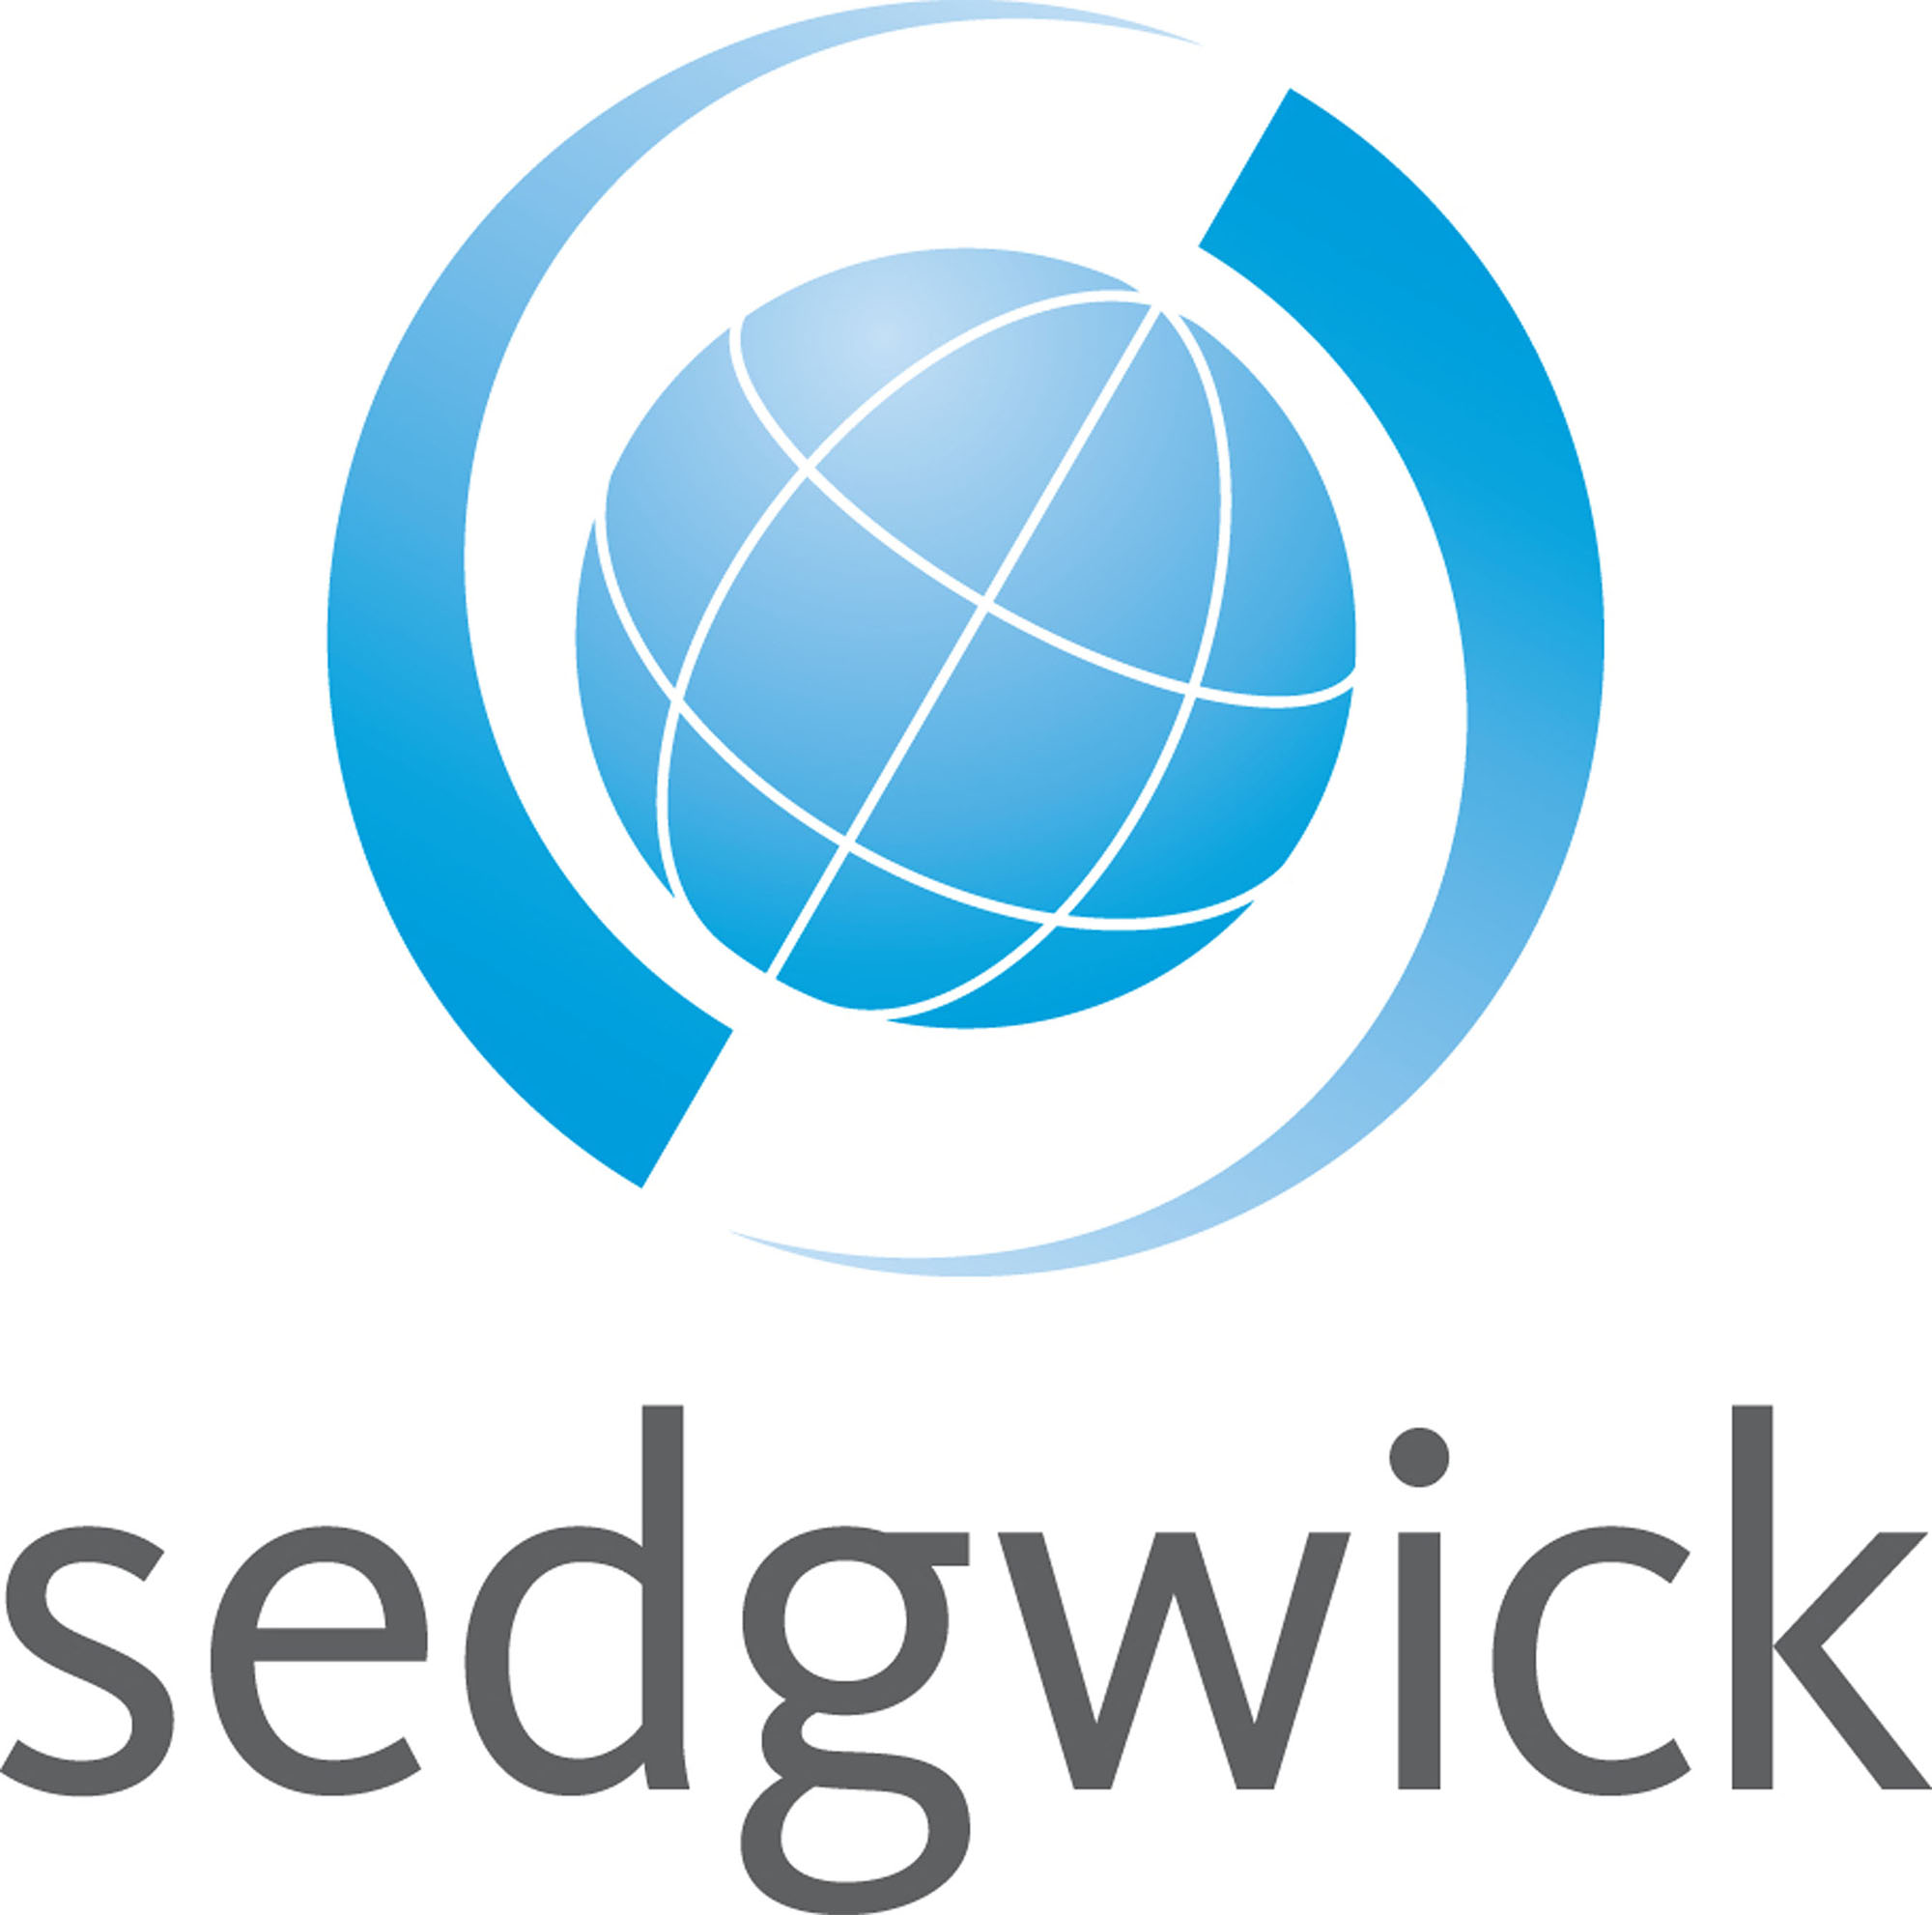 Sedgwick LegalEASE Legal Access